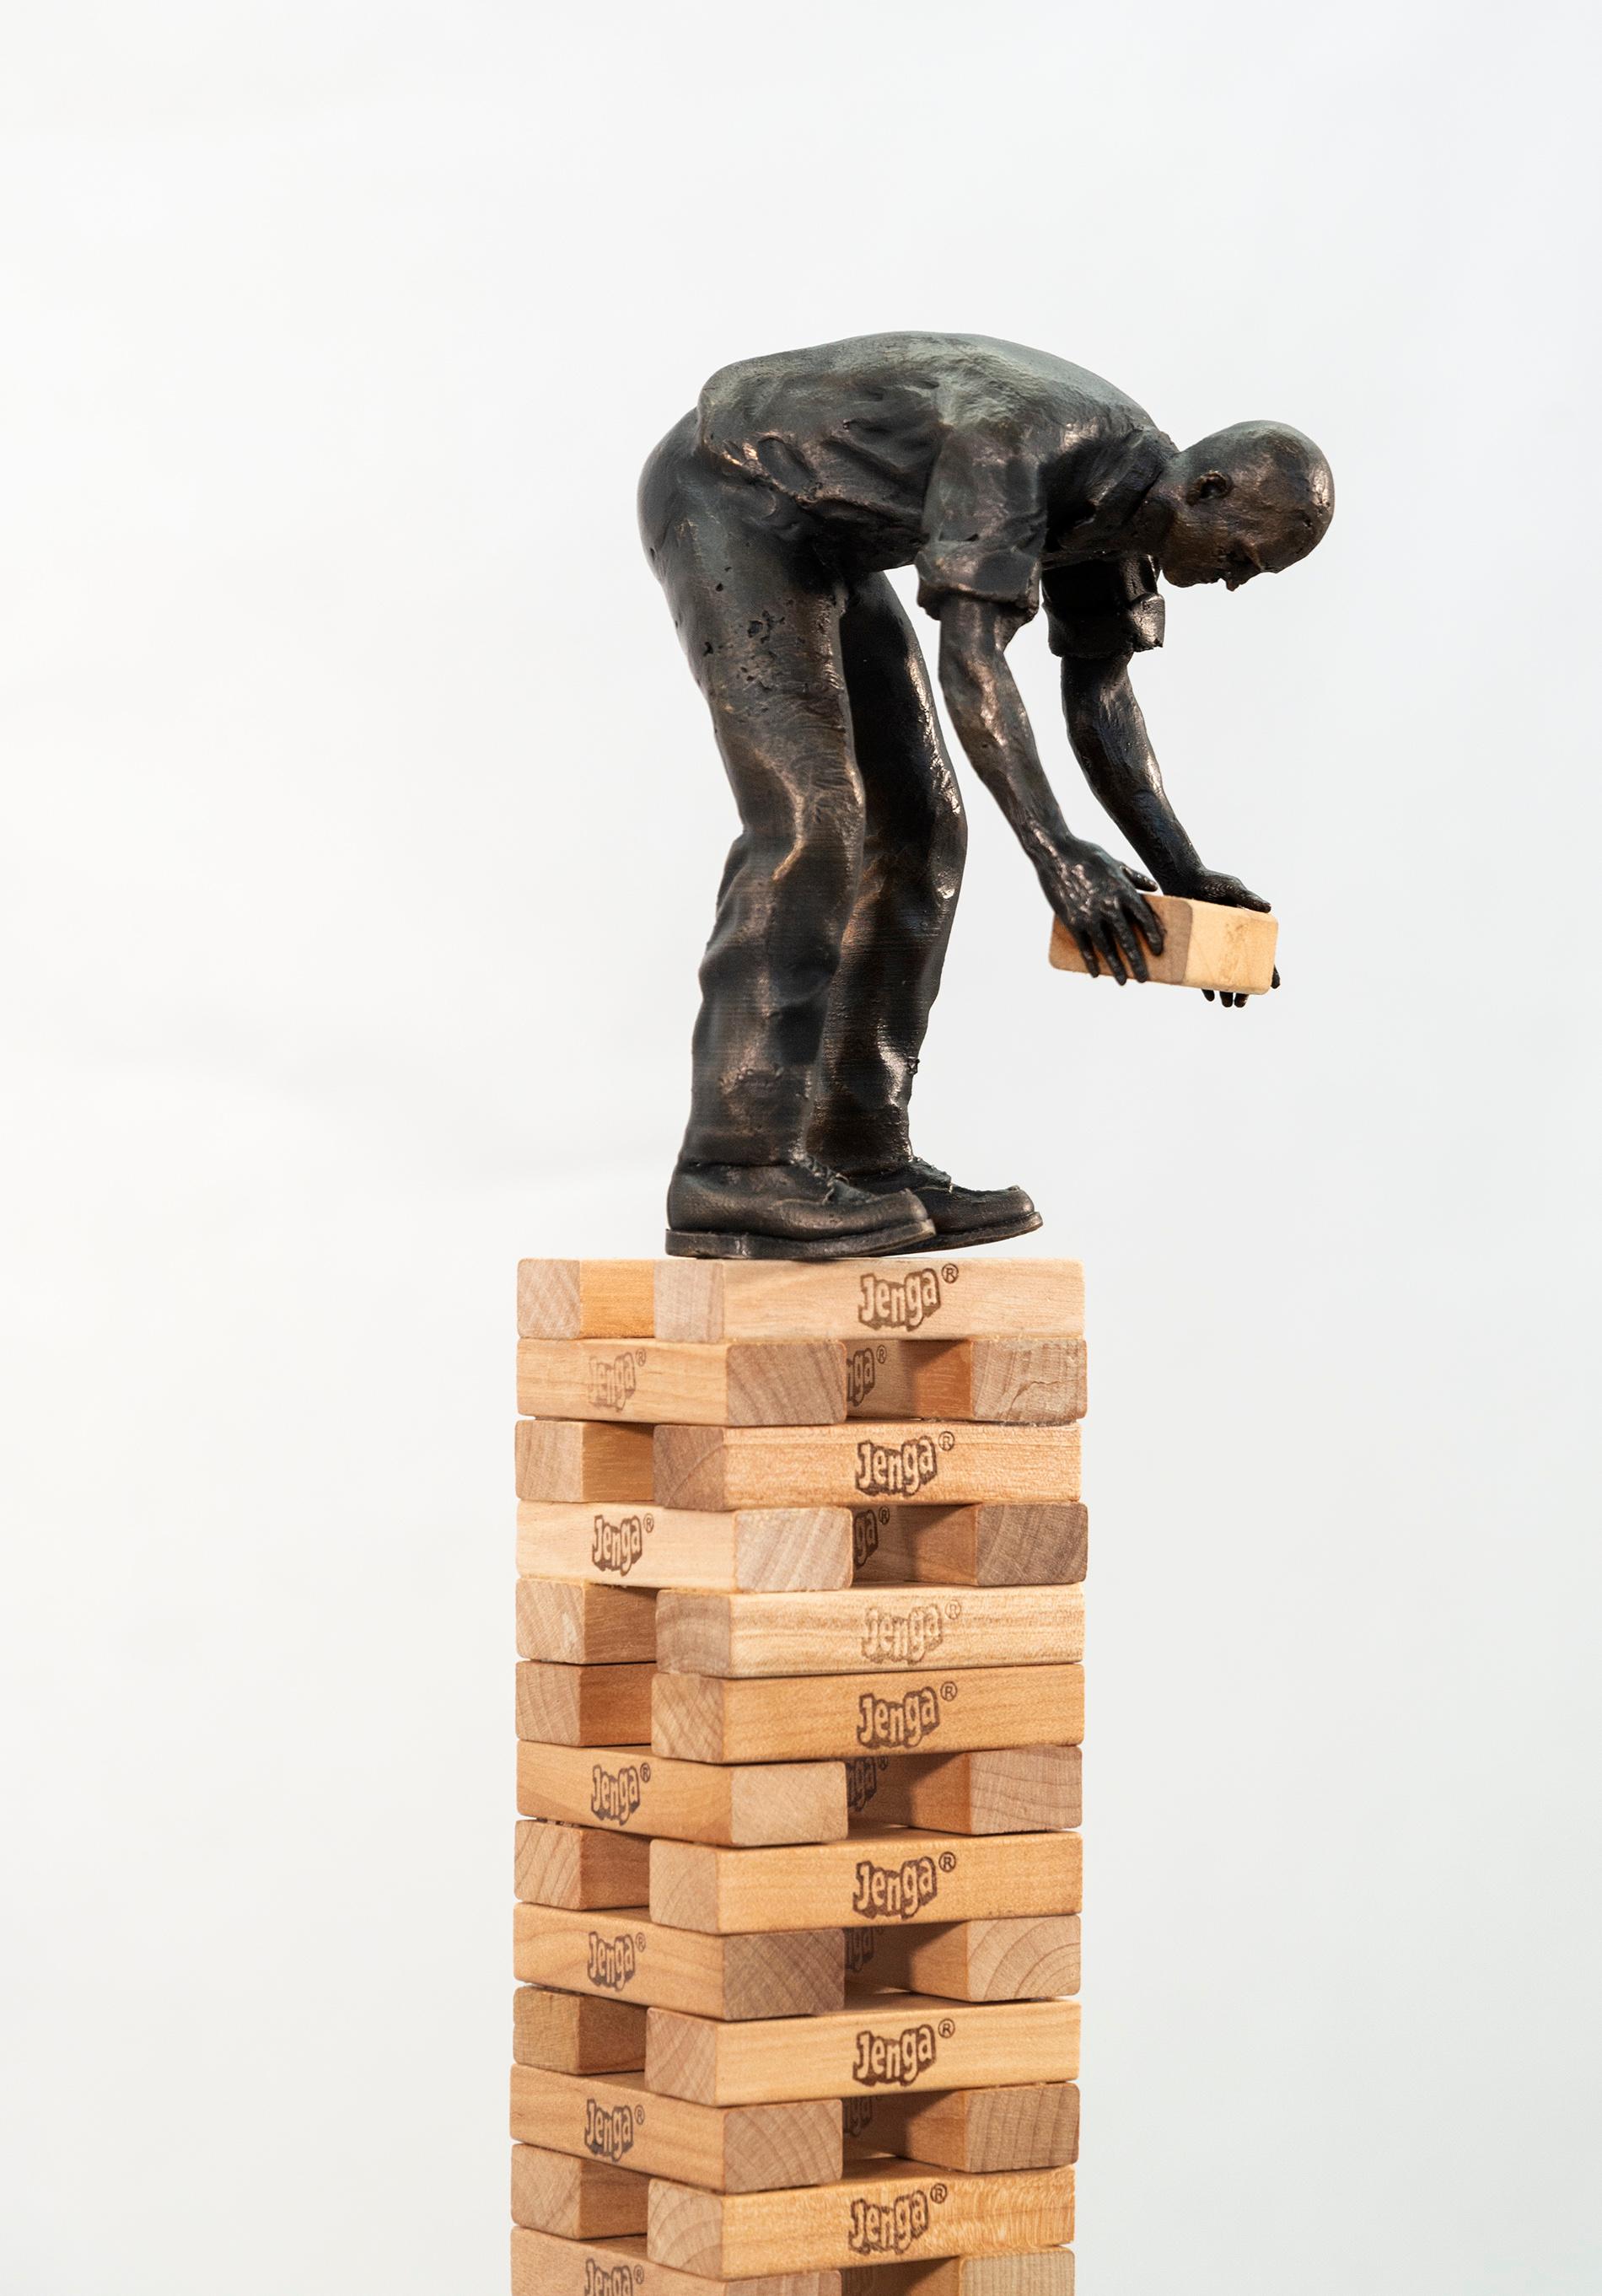 Work/Play Balance - tall, narrative, figurative, male, bronze, wood, sculpture 2